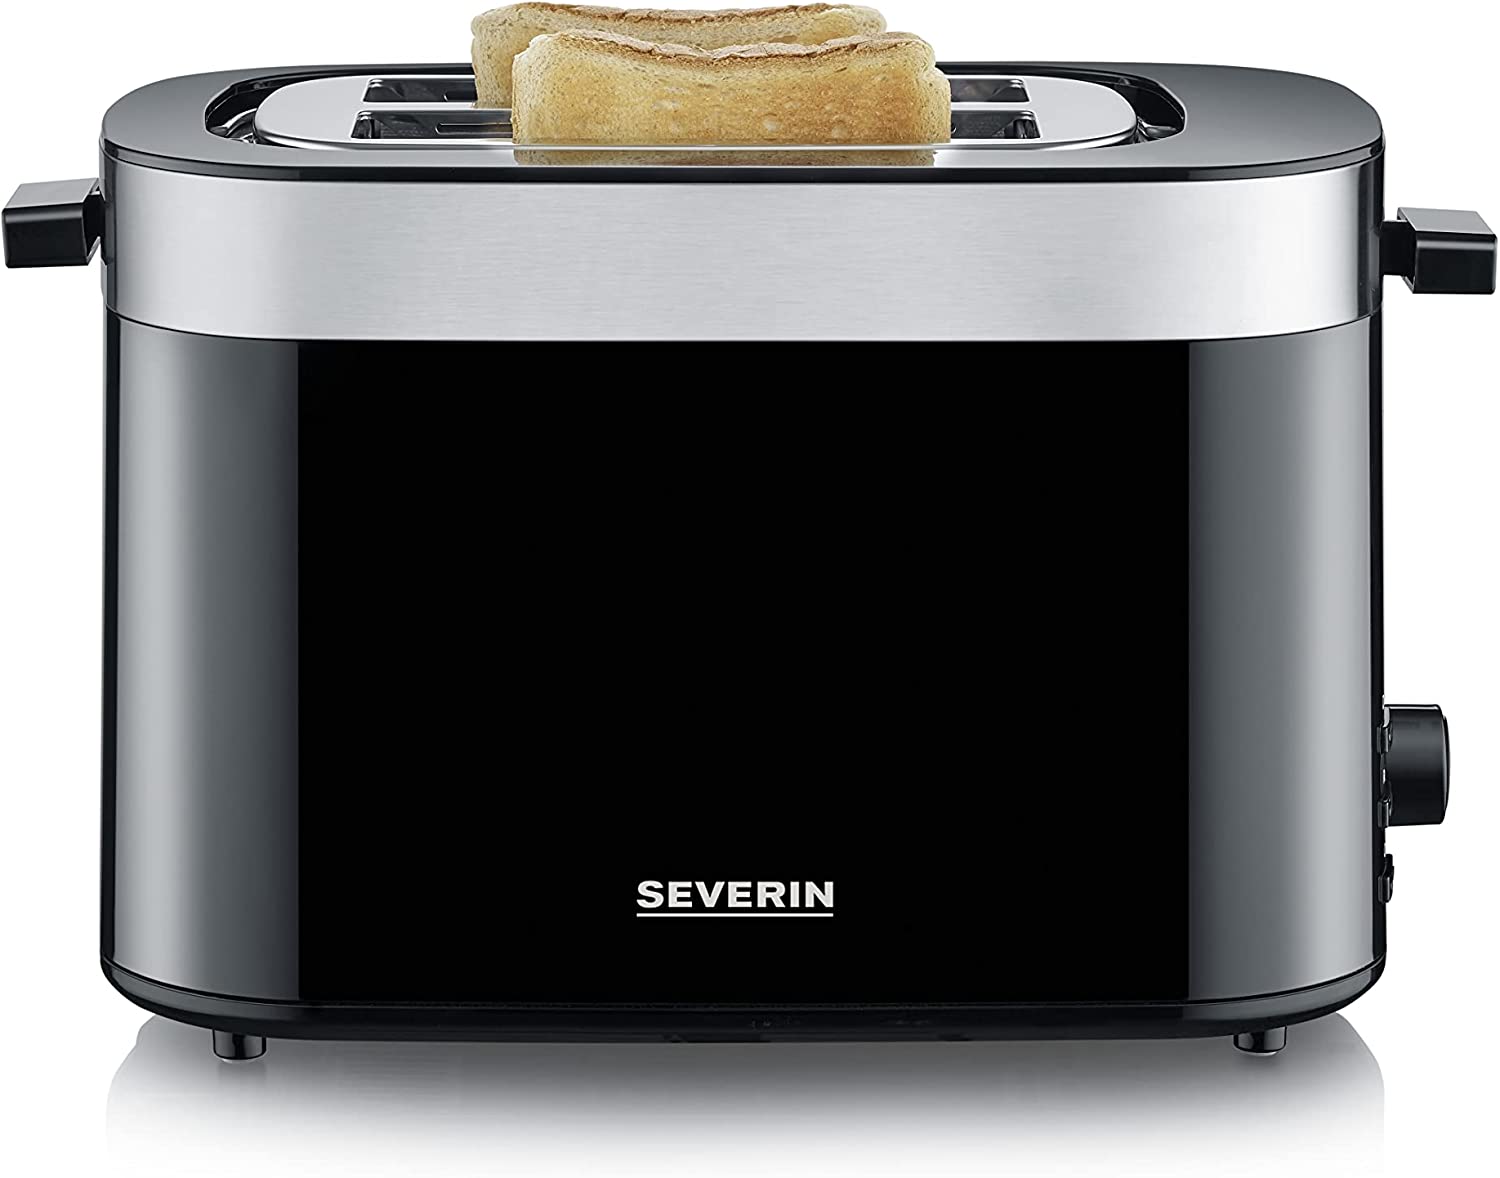 Severin AT 9264 Black Stainless Steel 2 Slice Toaster 800 Watt